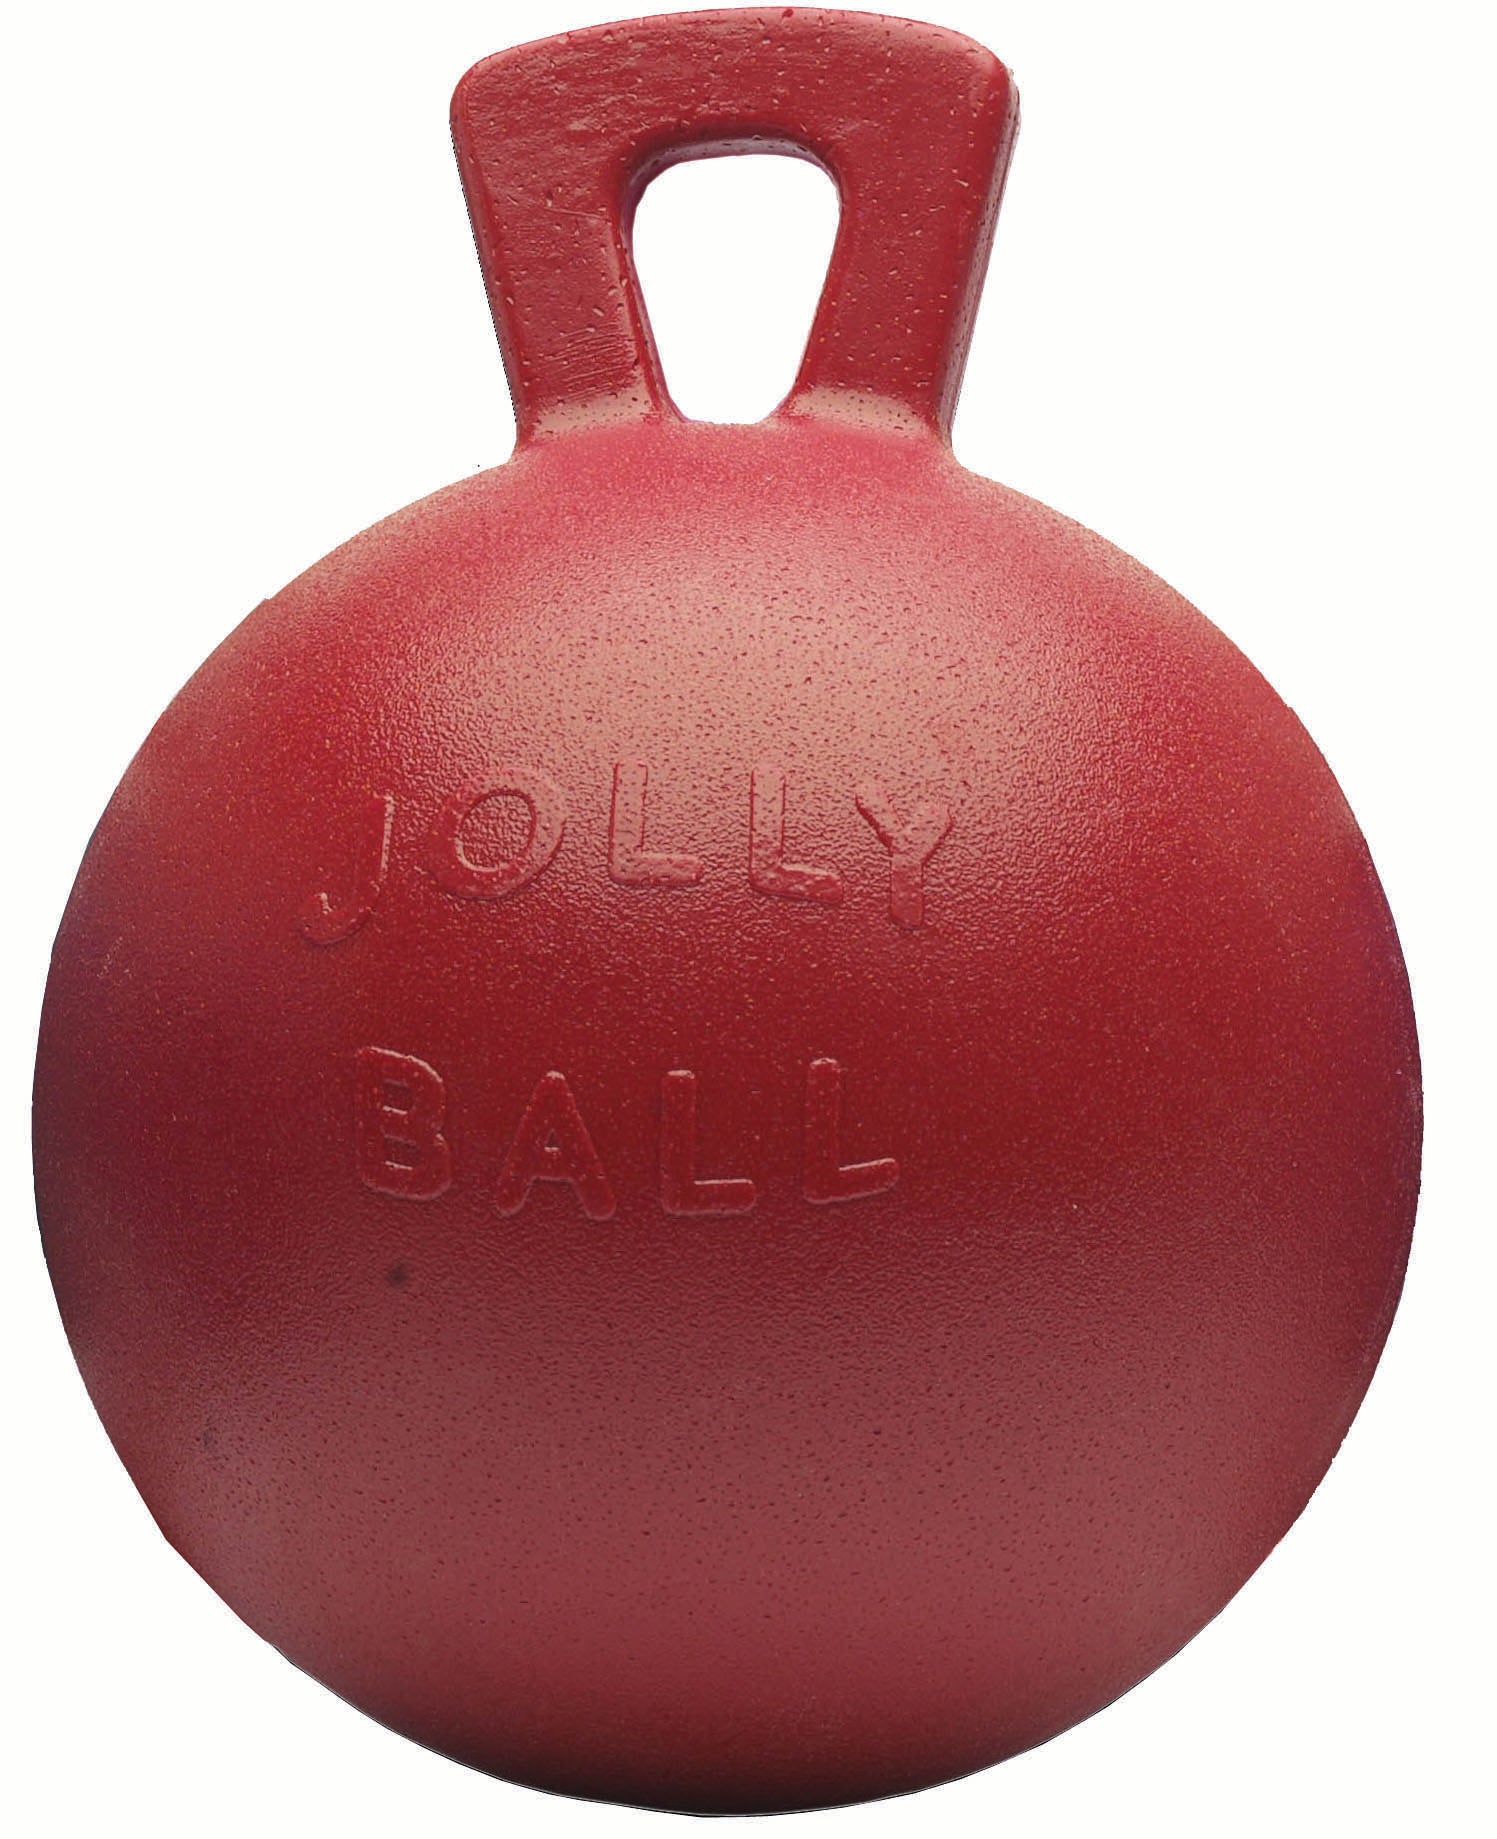 Jollyball-Horse  (410)